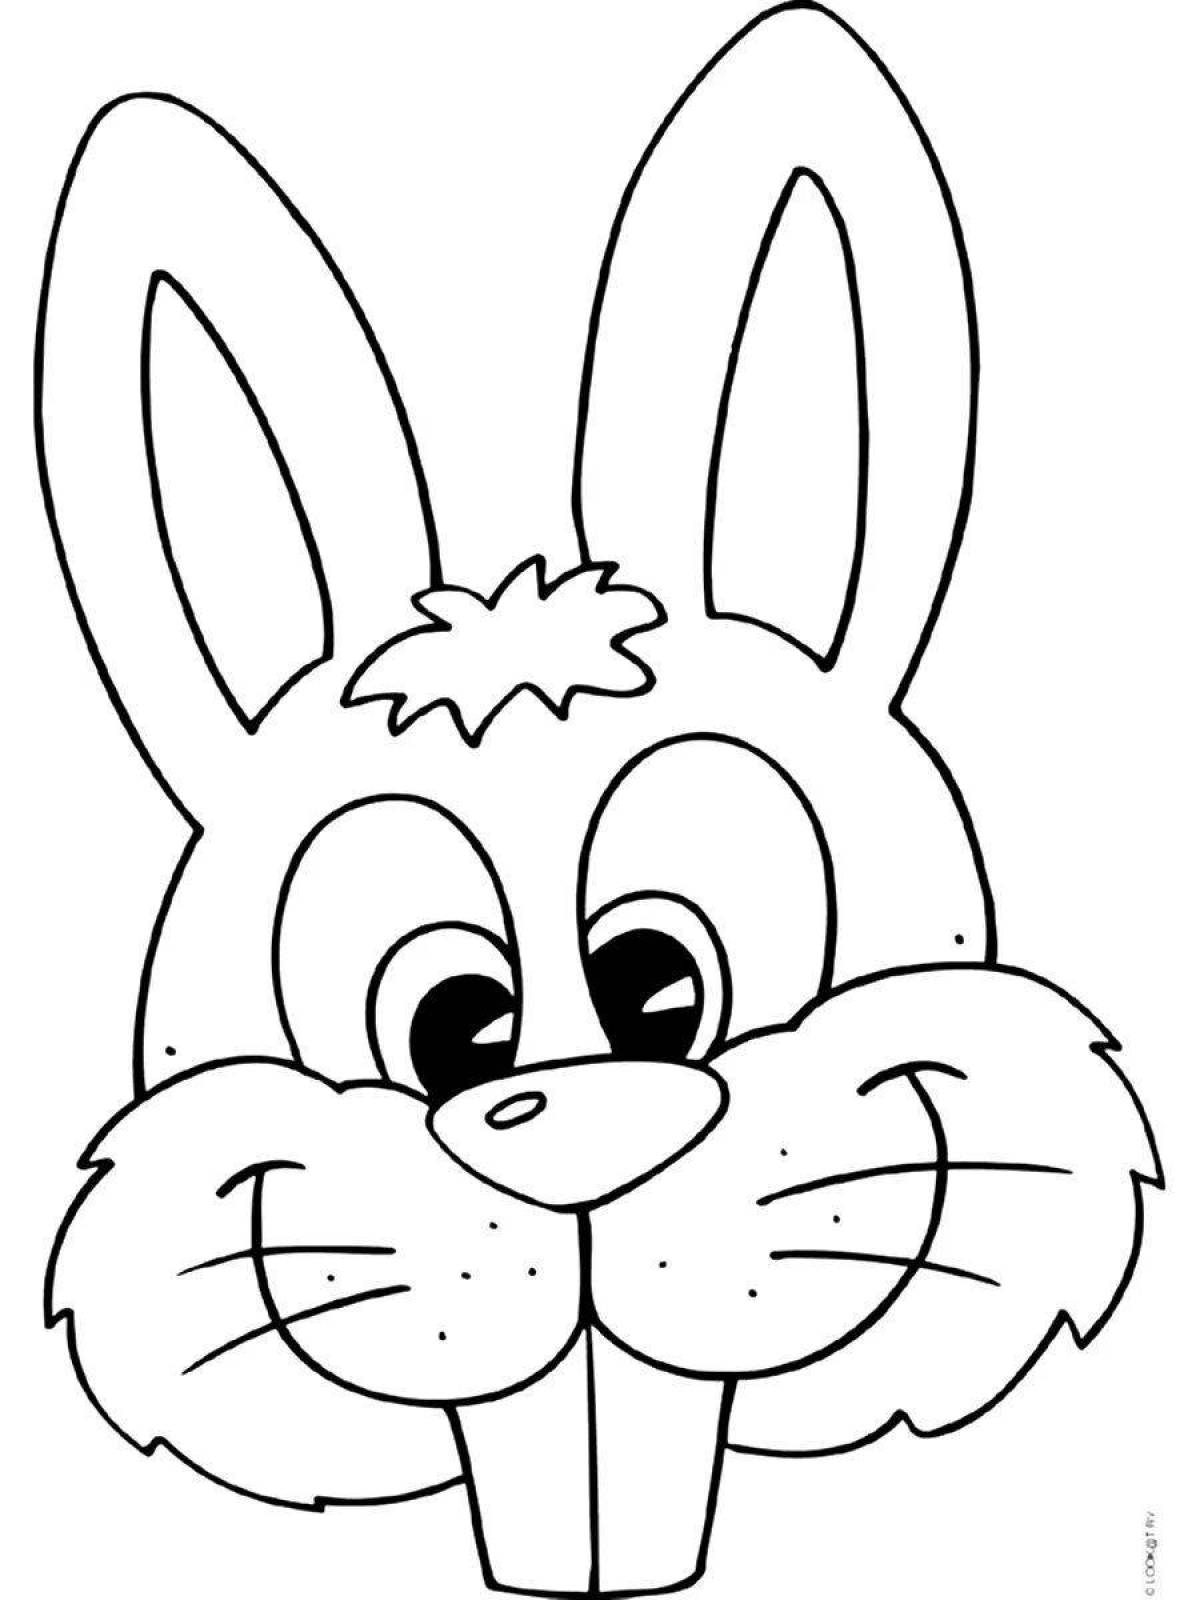 Snuggable coloring page bunny head